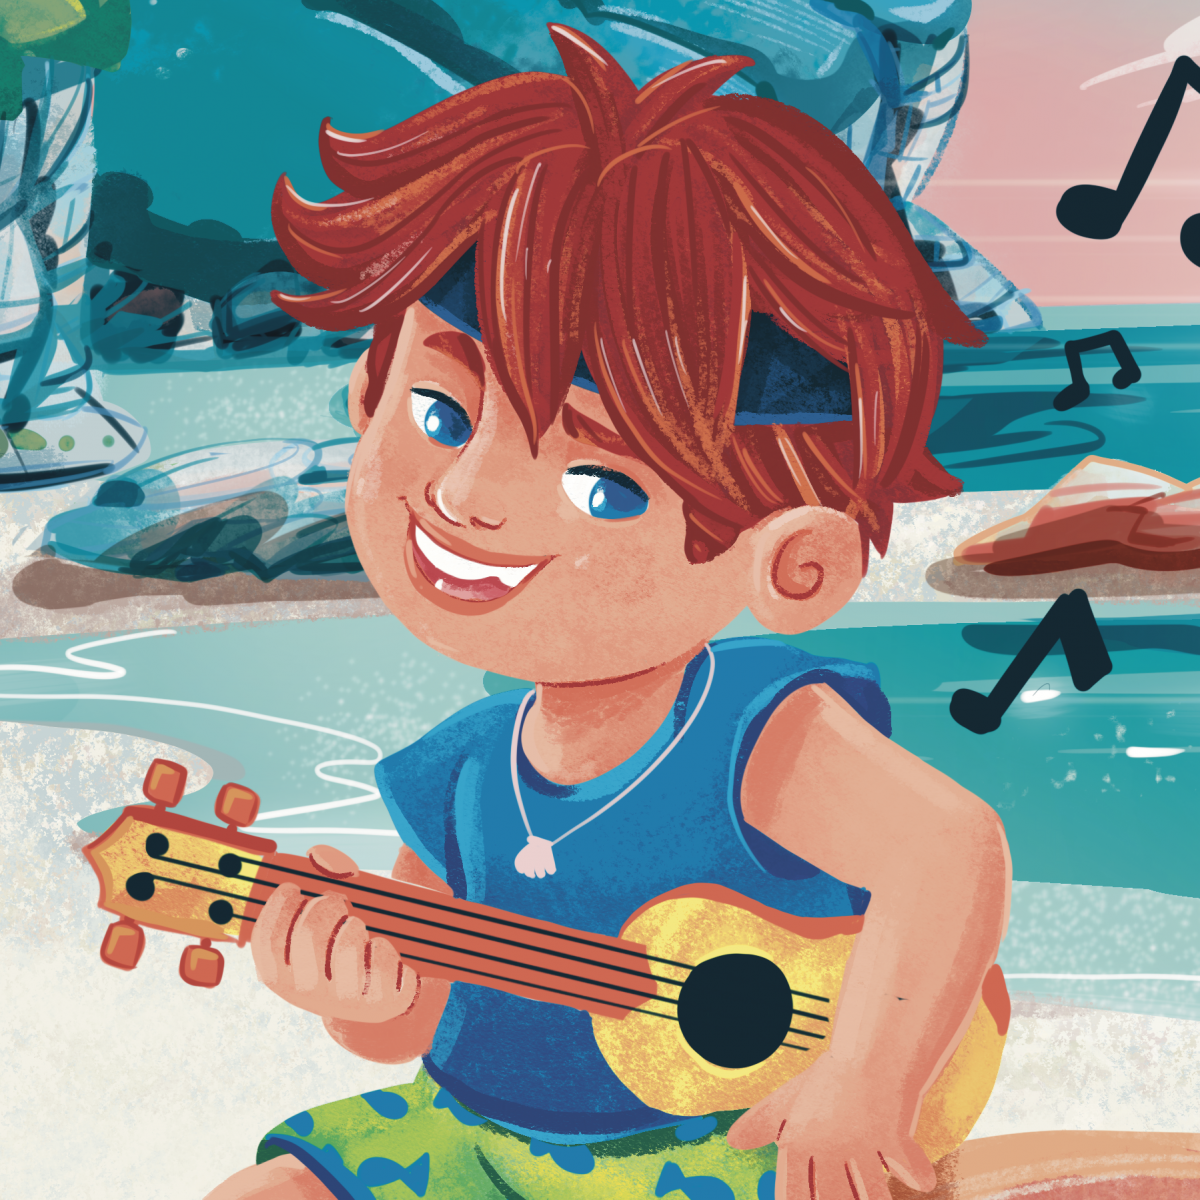 kid play ukulele in the beach